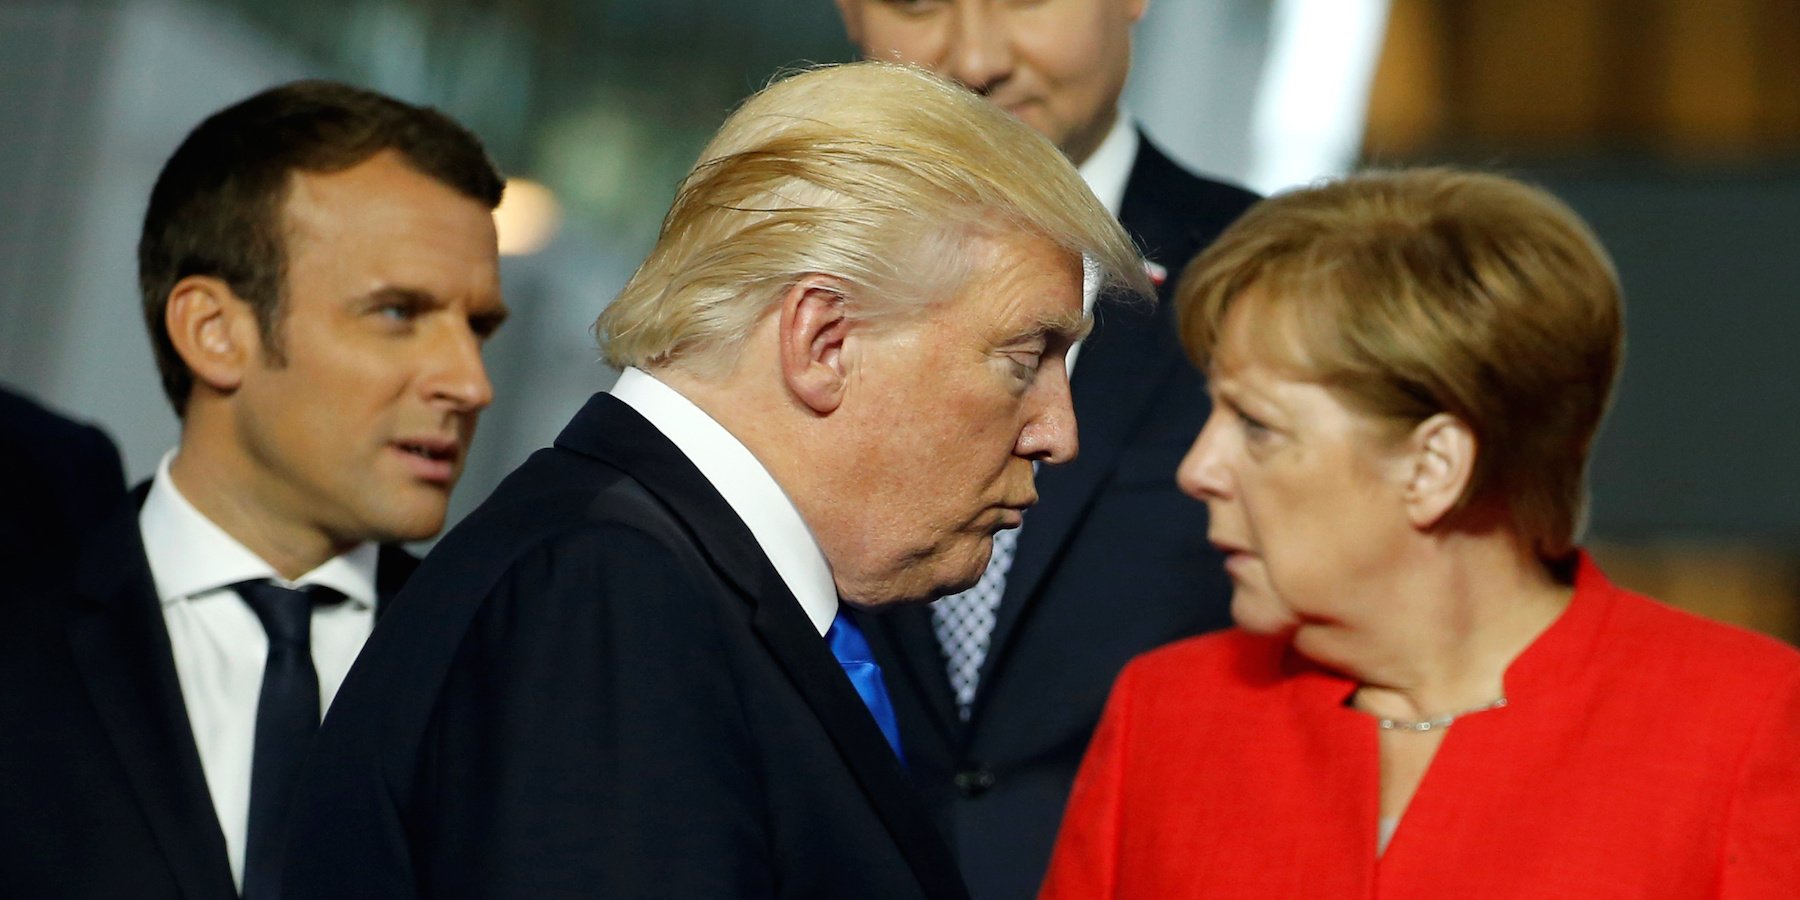 EU will act against U.S. tariffs on steel, aluminum: Merkel